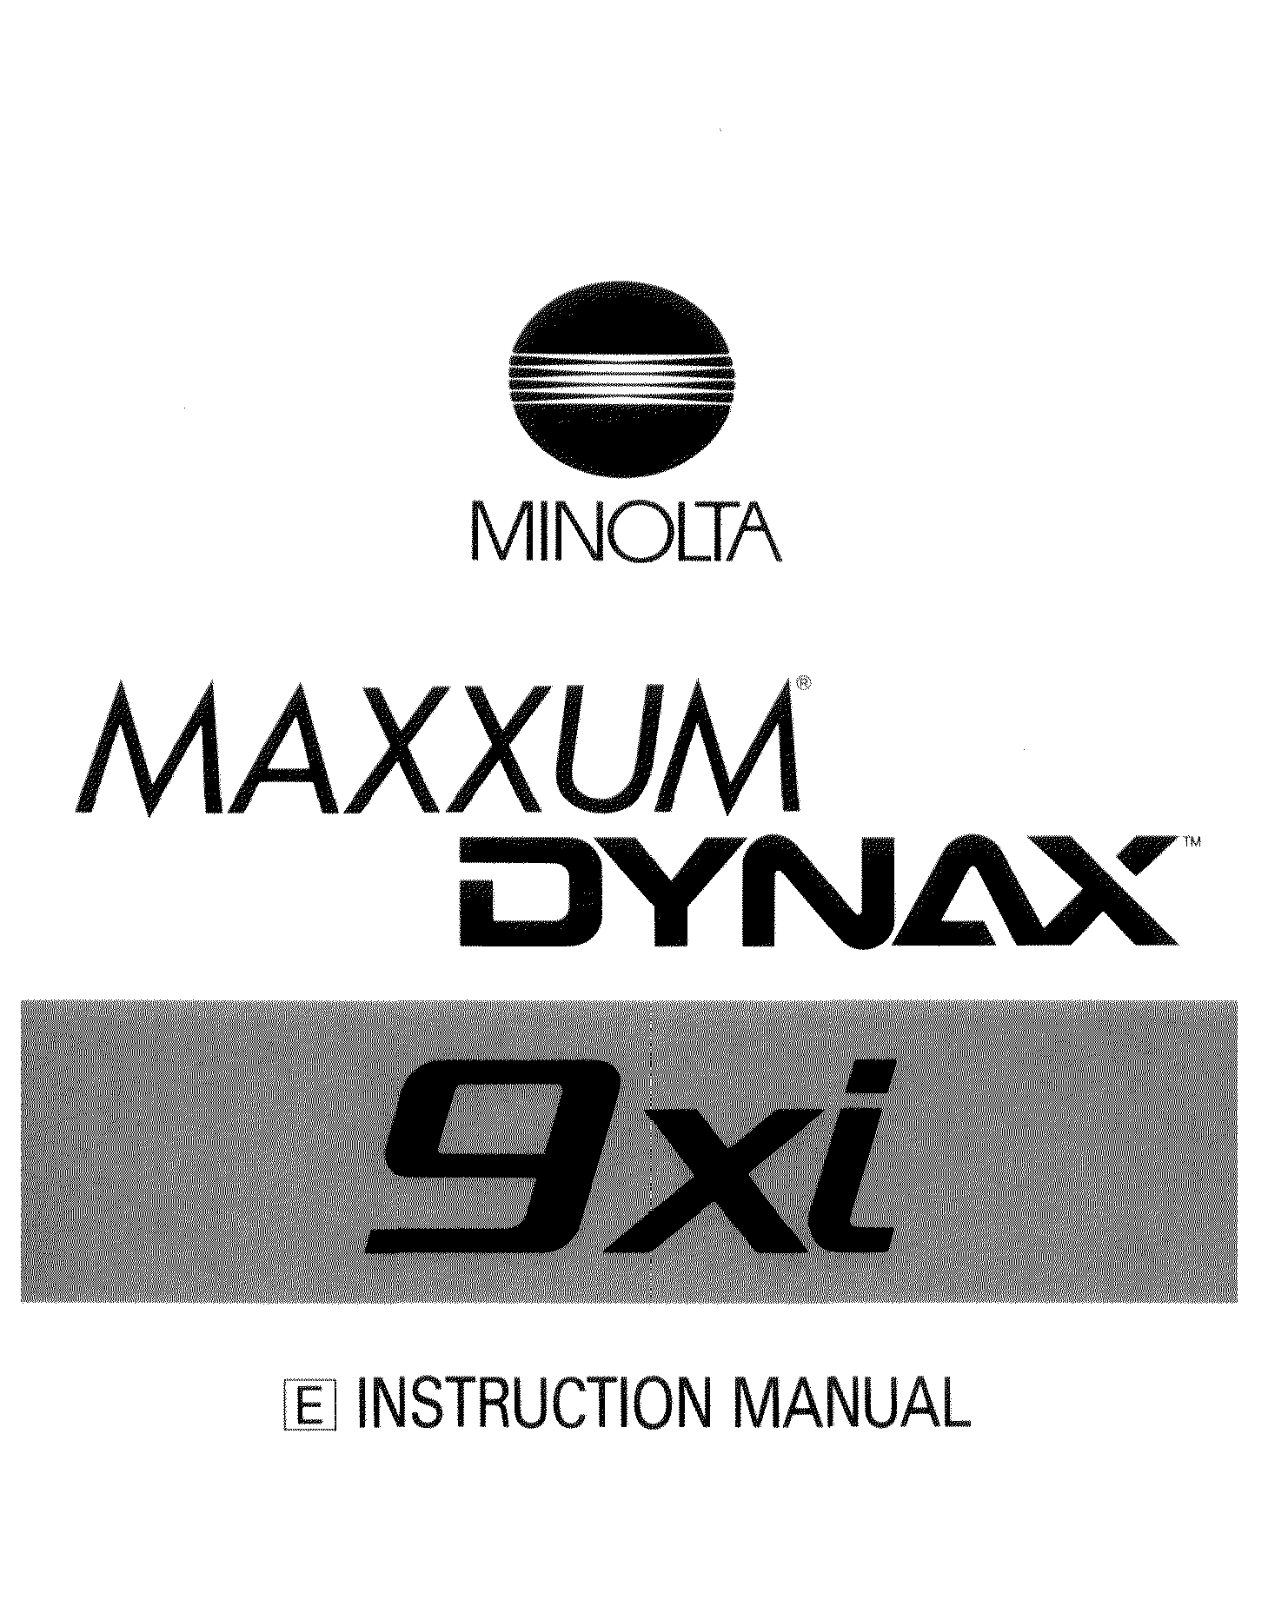 Minolta MAXXUM 9XI instruction Manual